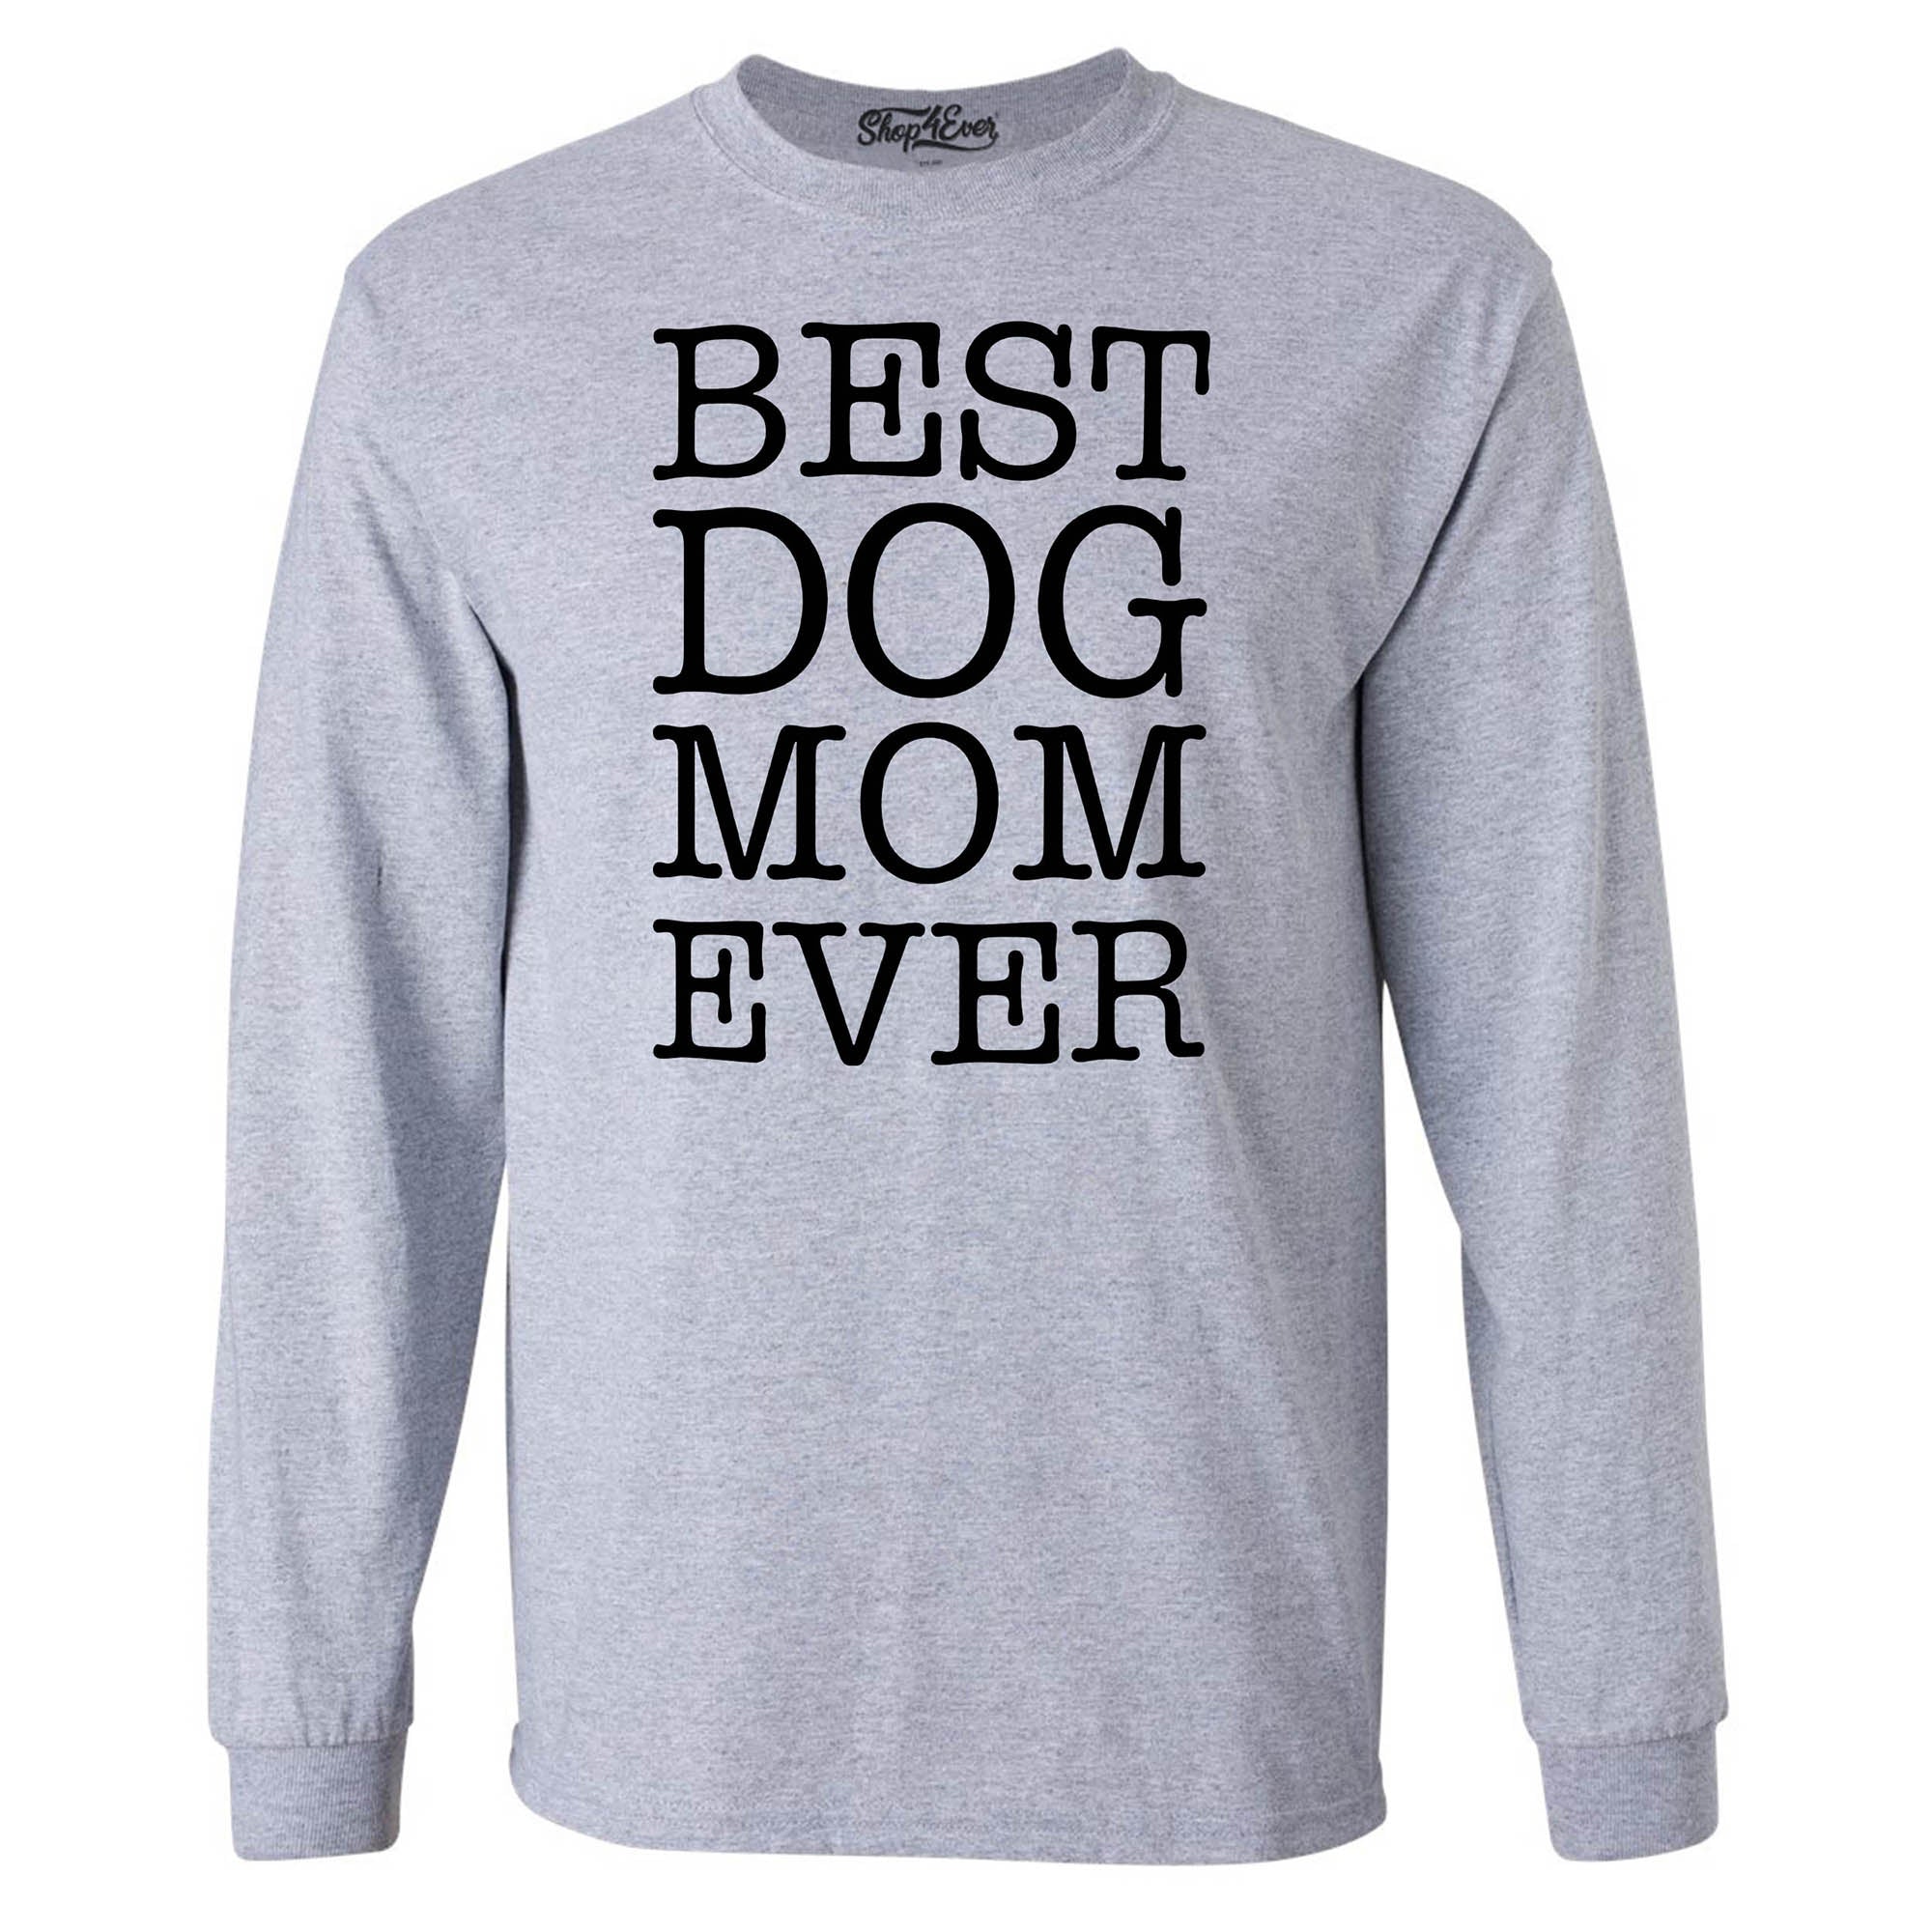 Best Dog Mom Ever Long Sleeve Shirt